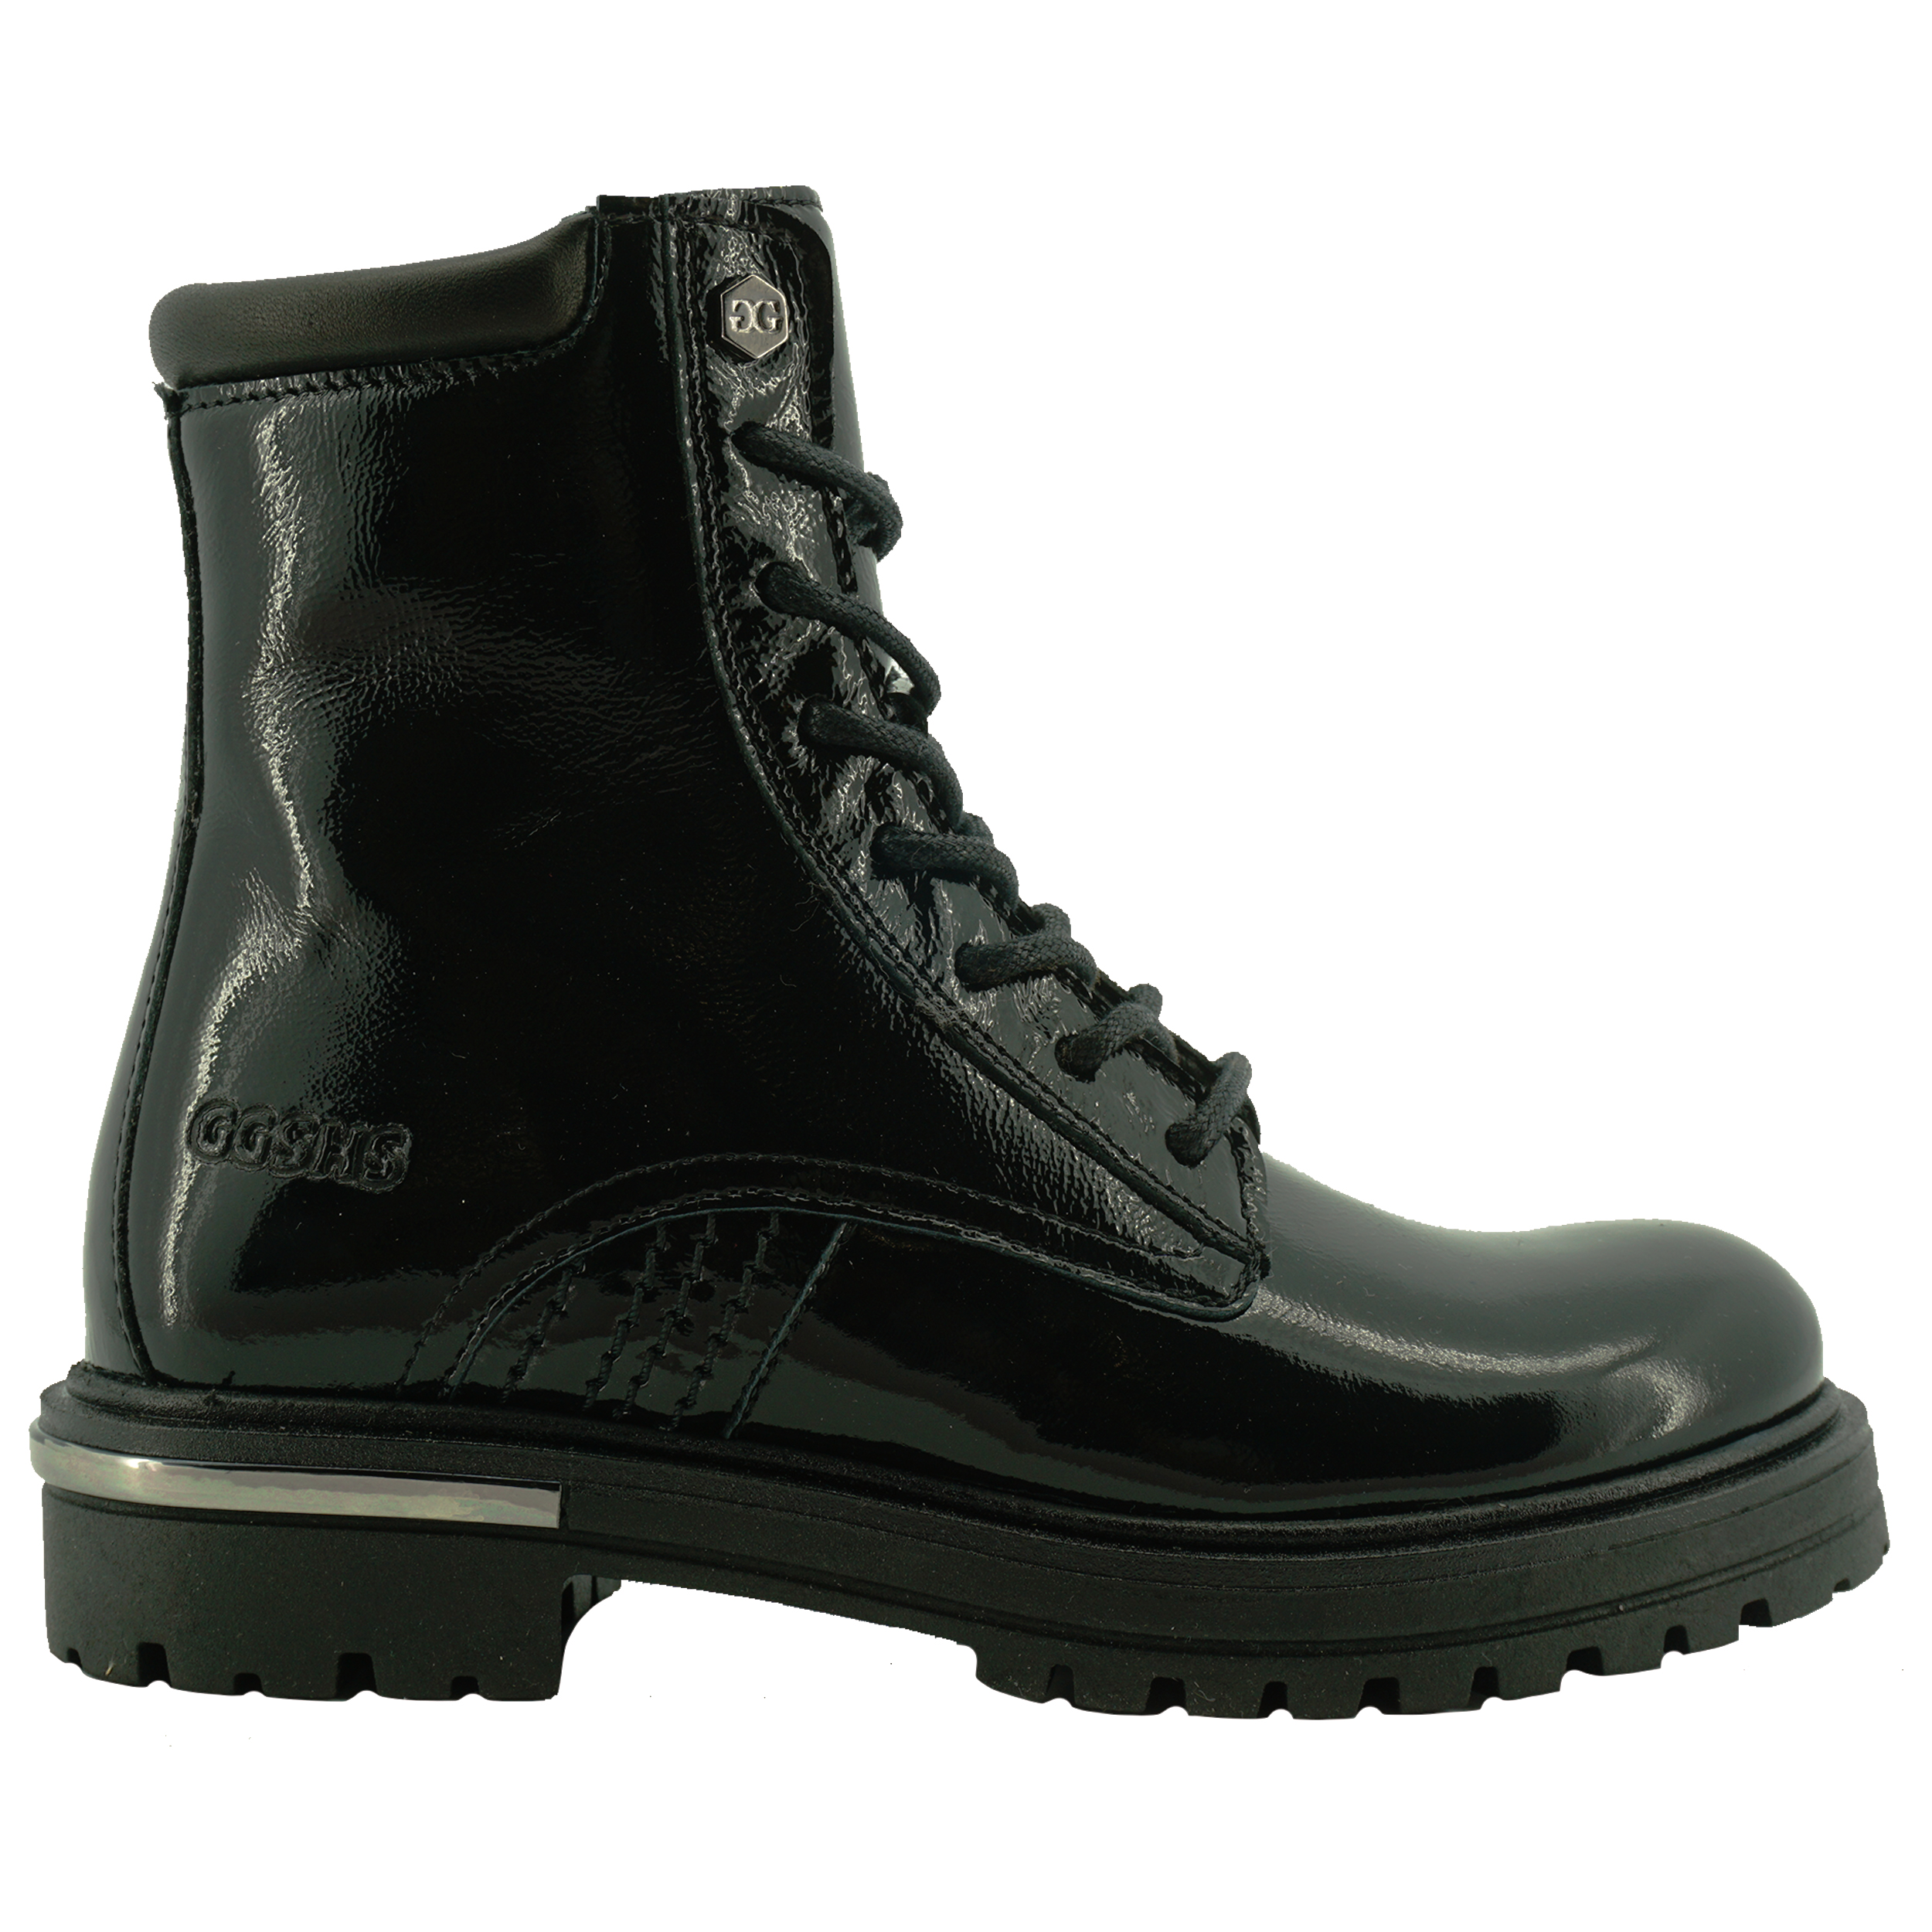 Giga G3785 Boot Patent Black